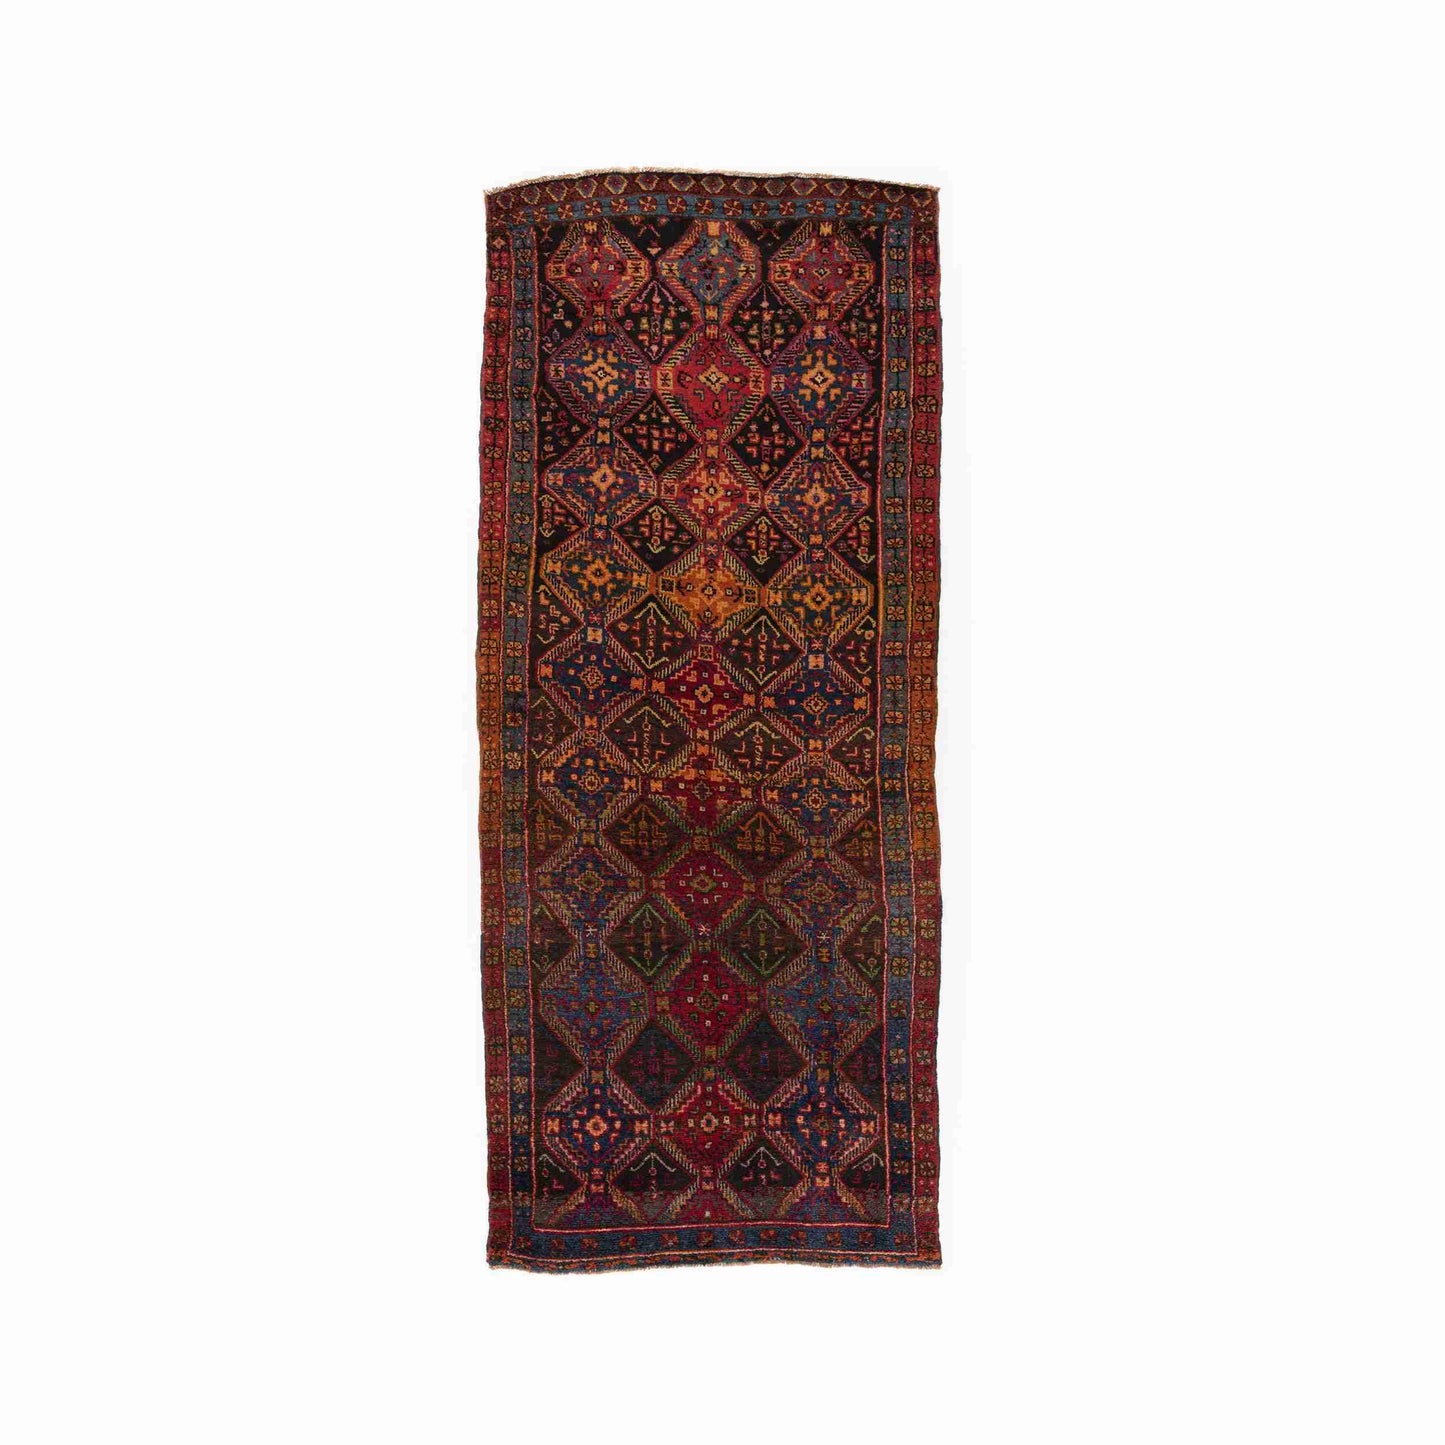 Carpet Hand Woven Anatolian Wool On Wool Authentic Unique Original 146 X 356 Cm - 4' 10'' X 11' 9'' ER23